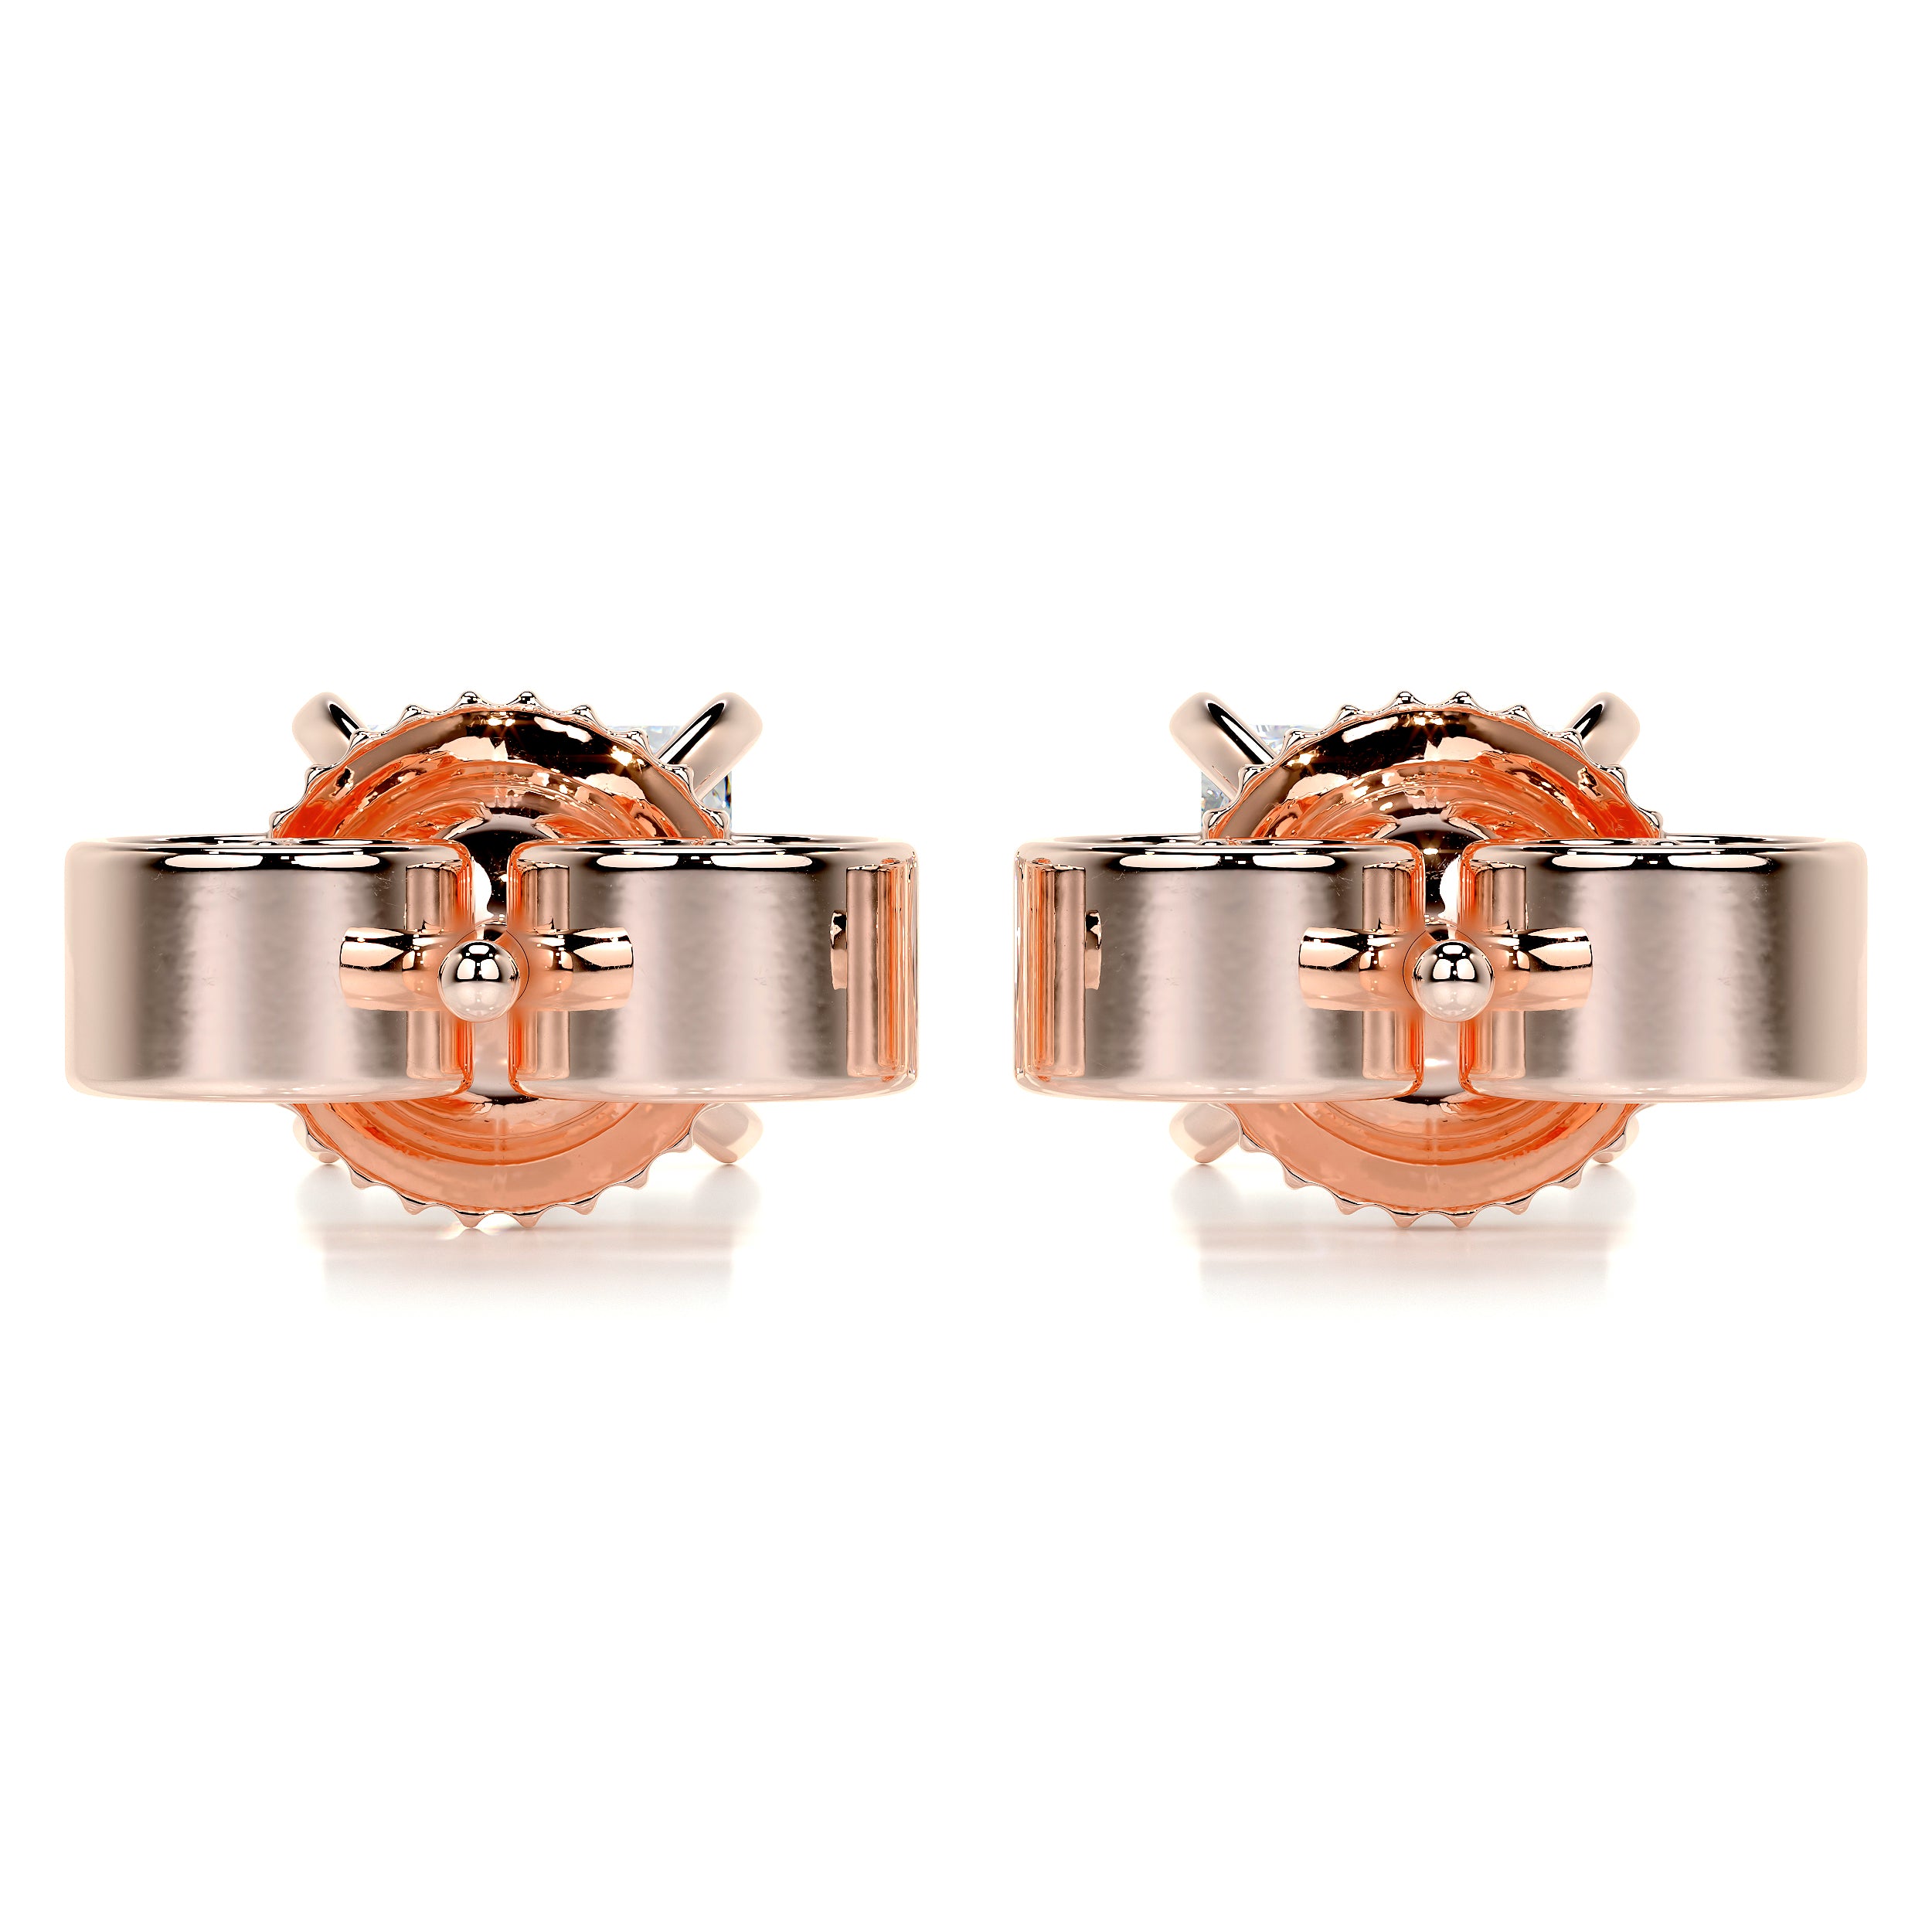 Jamie Diamond Earrings -14K Rose Gold